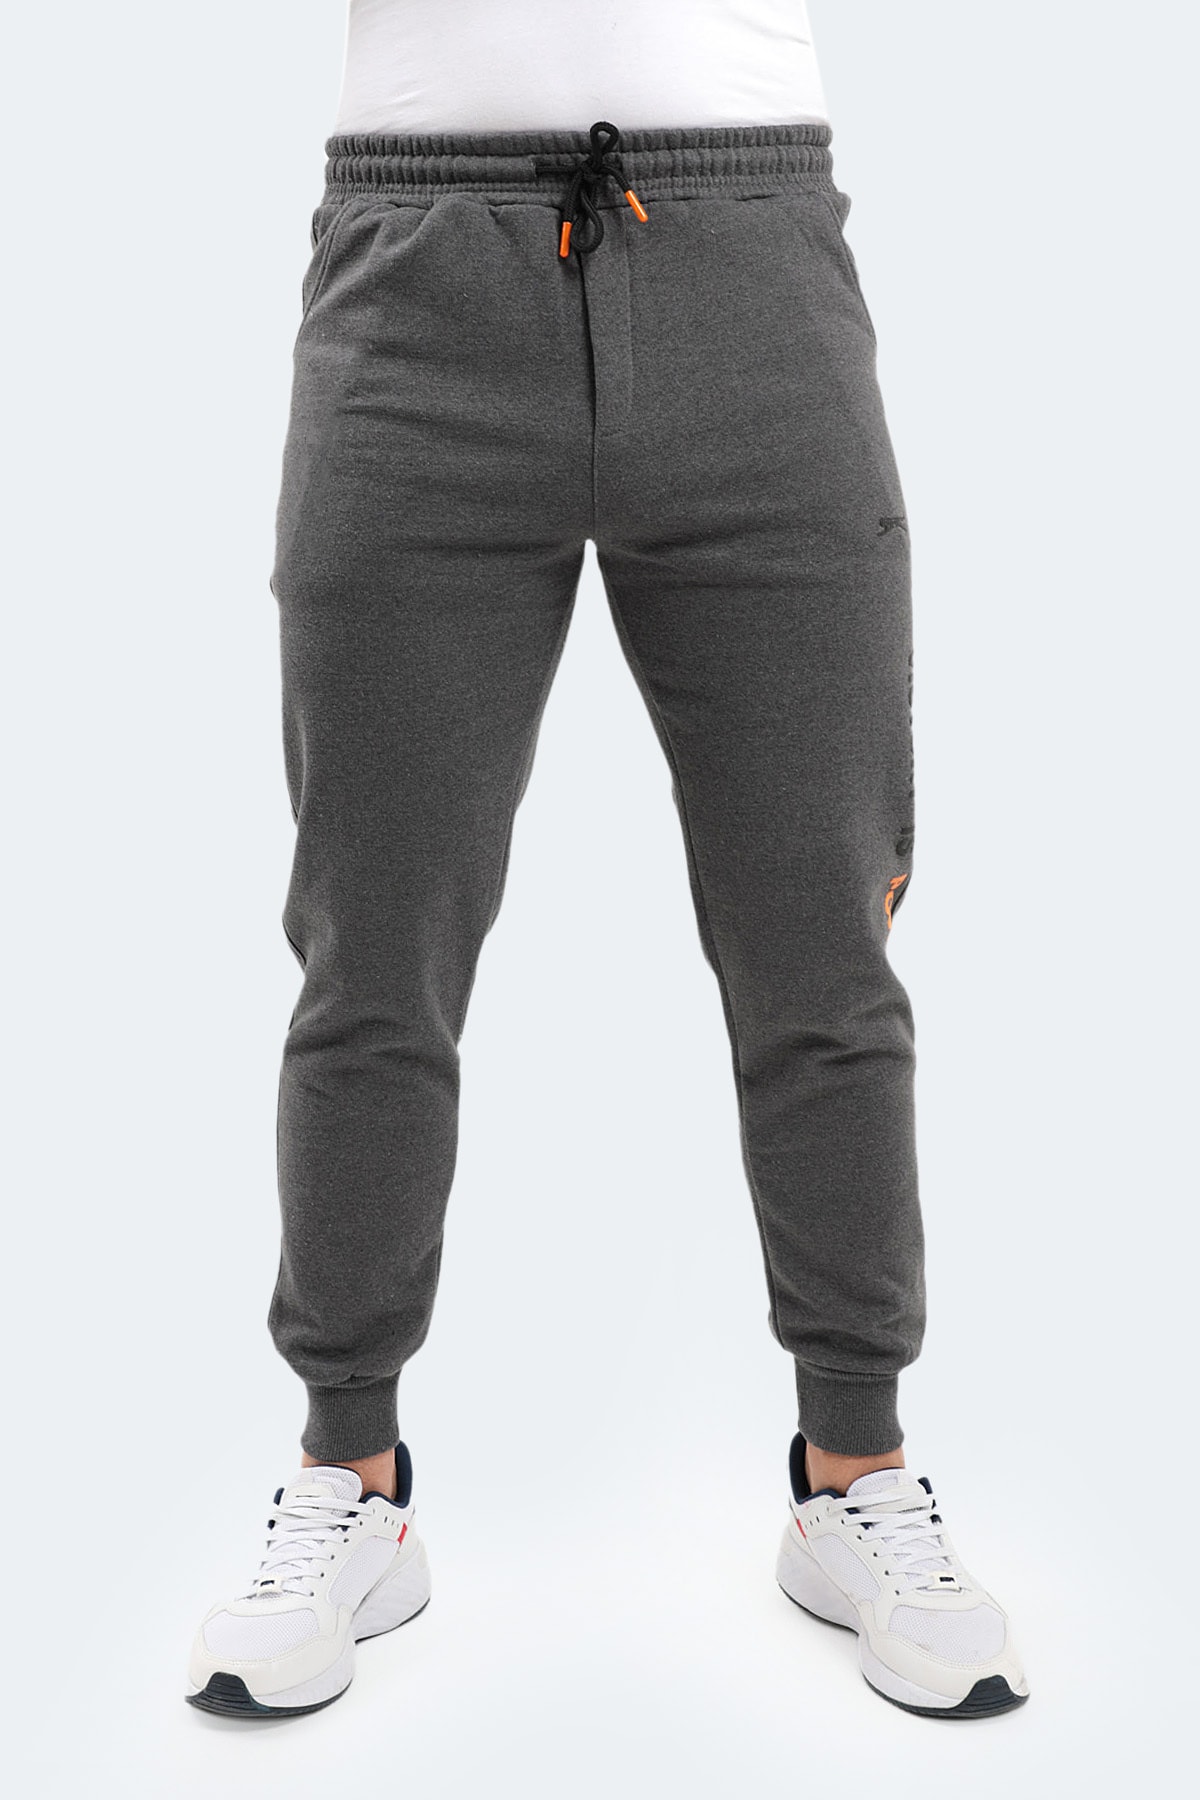 Slazenger Nahal Men's Sweatpants Dark Gray